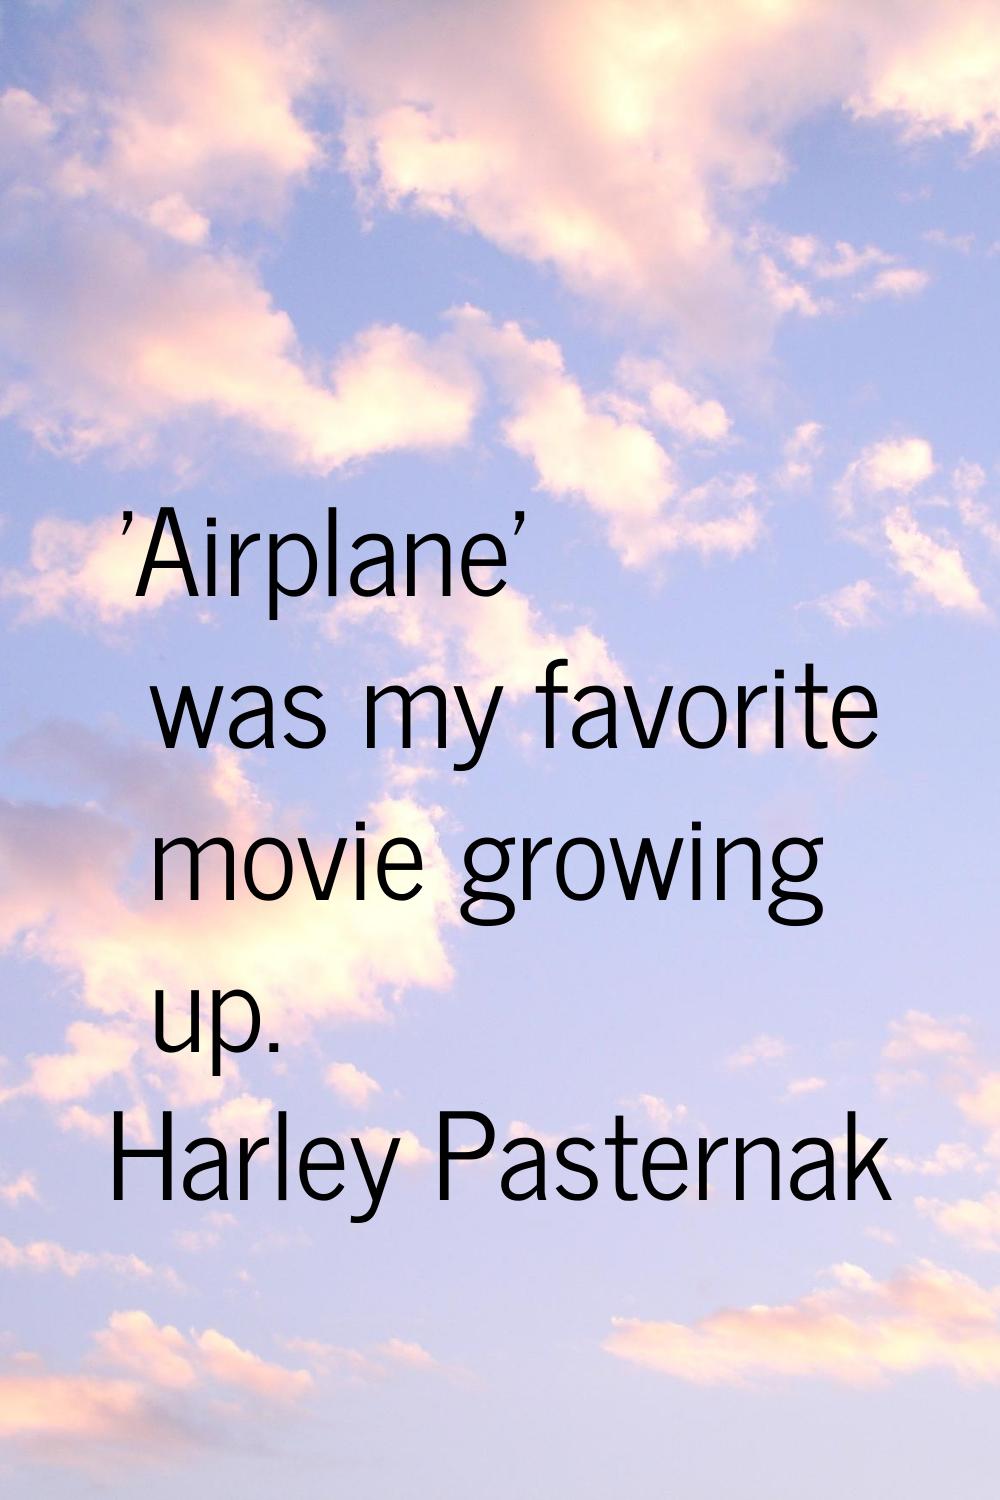 'Airplane' was my favorite movie growing up.